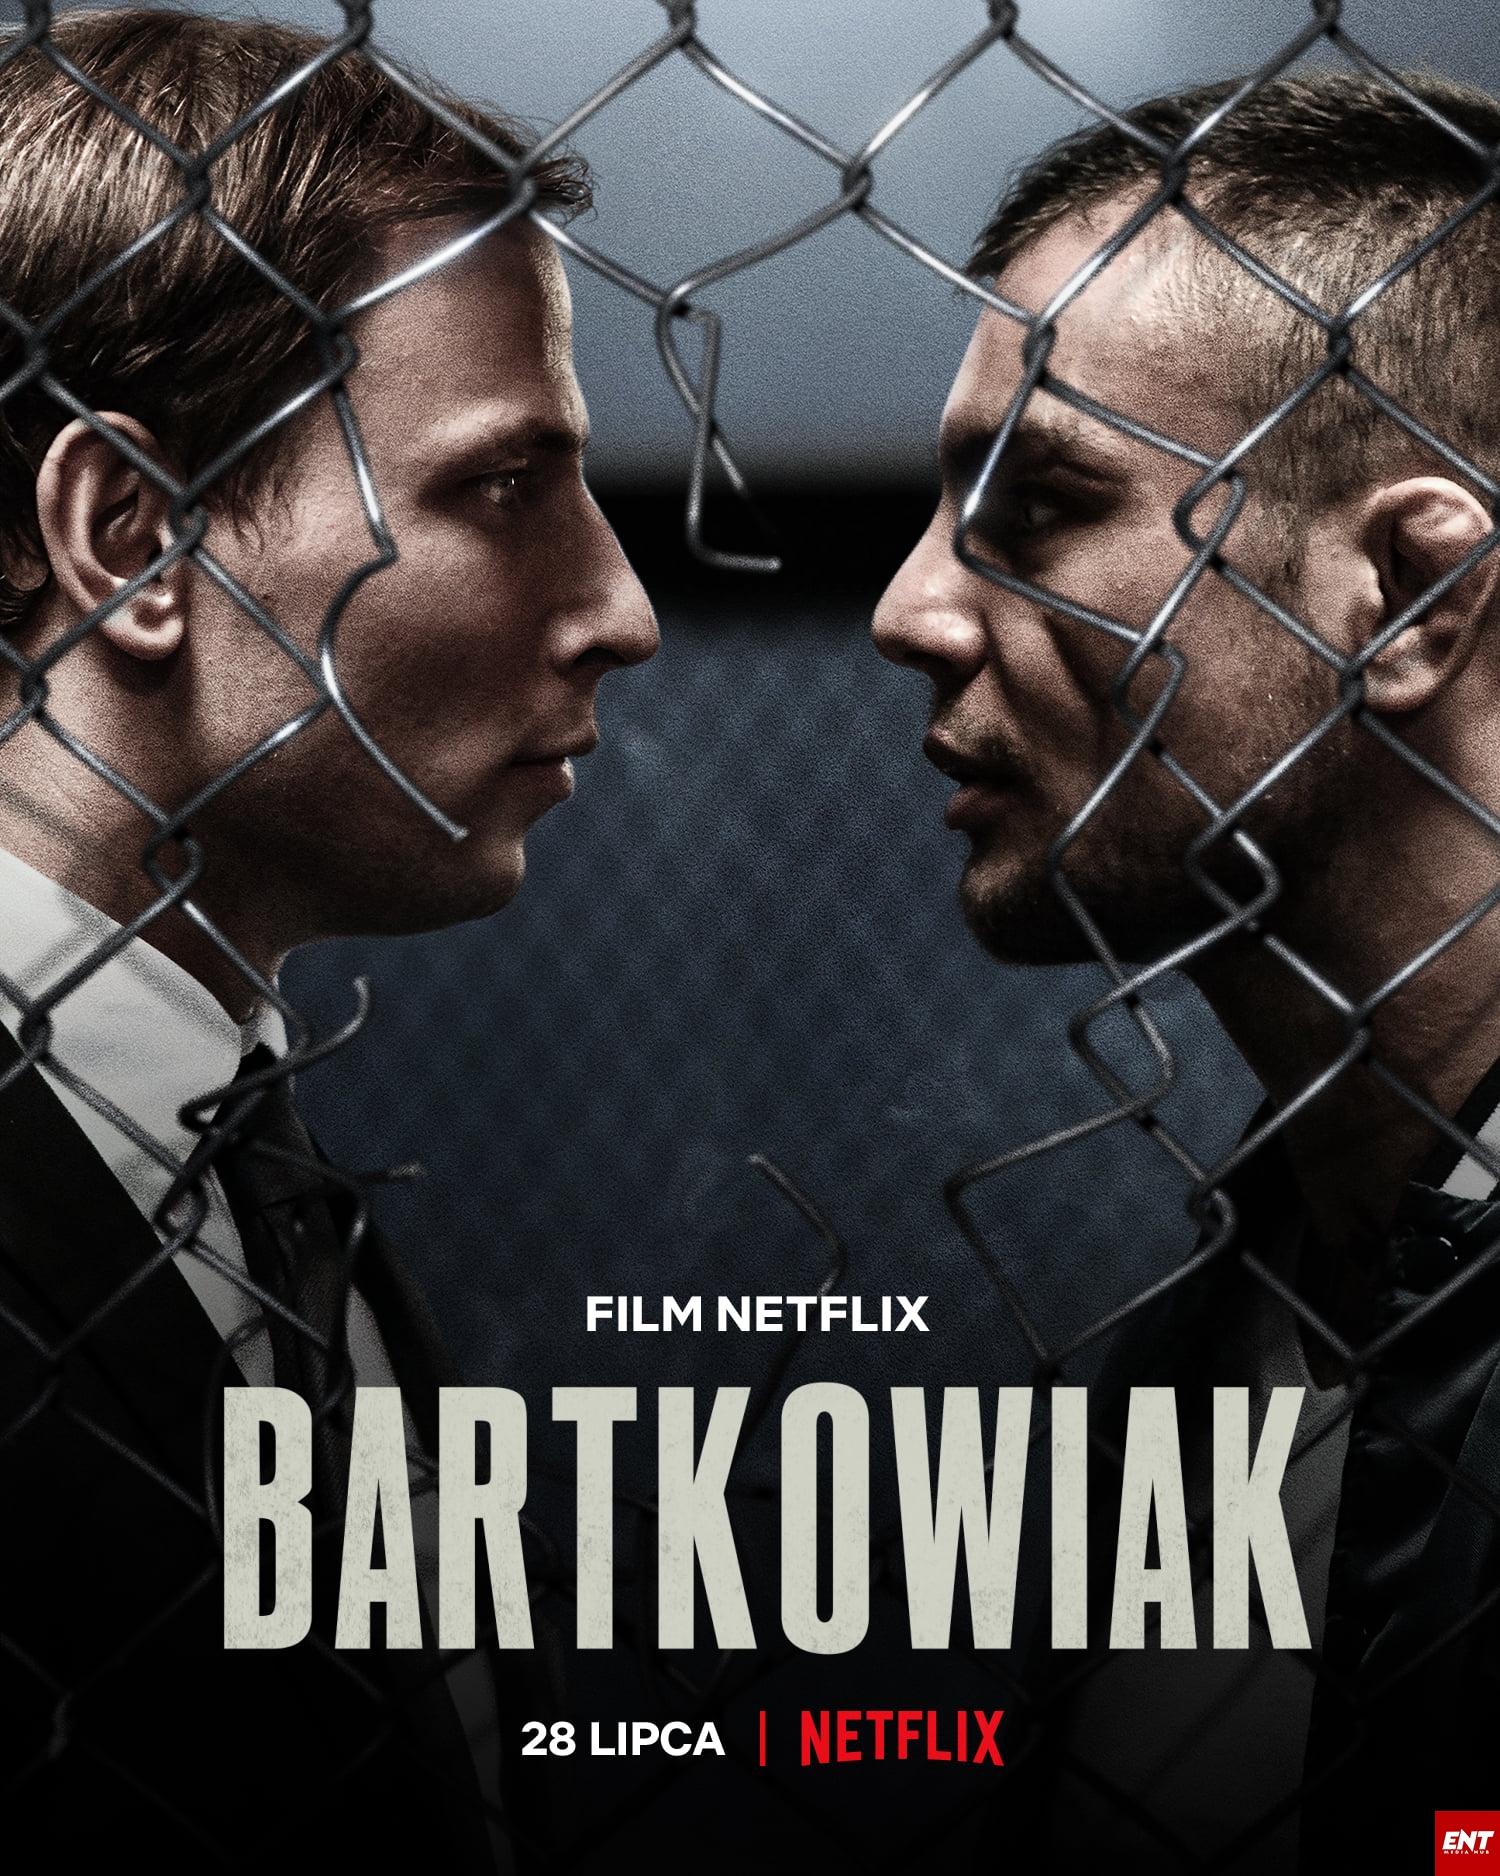 MOVIE : Bartkowiak (2021)